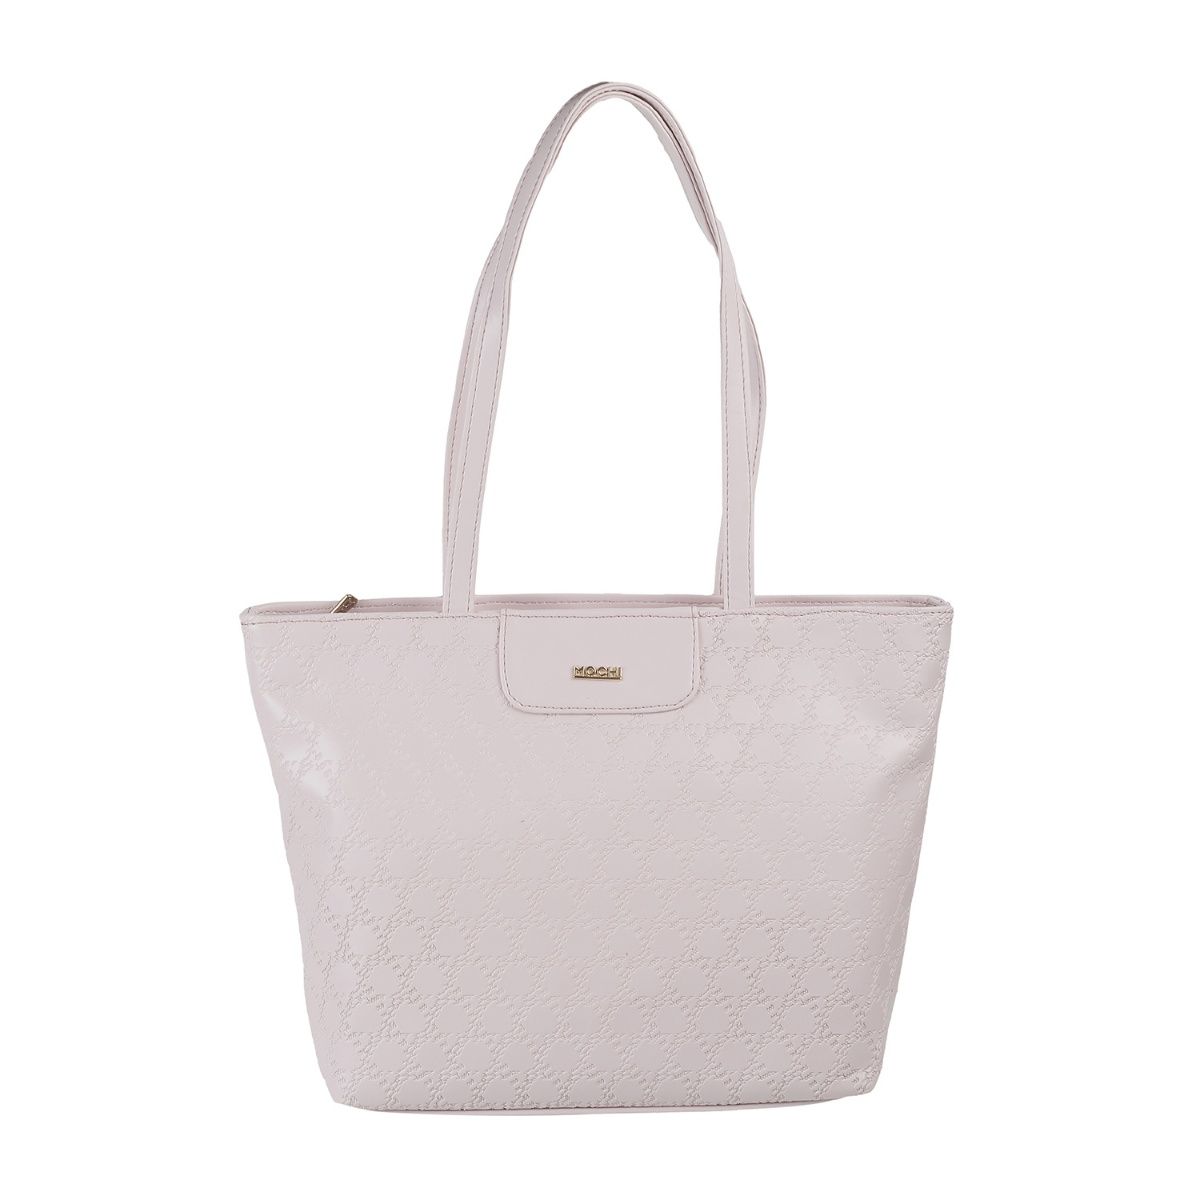 Buy Mochi Women Dome Satchel Bags | Ladies Handbag (66-8133-Light Blue) at  Amazon.in